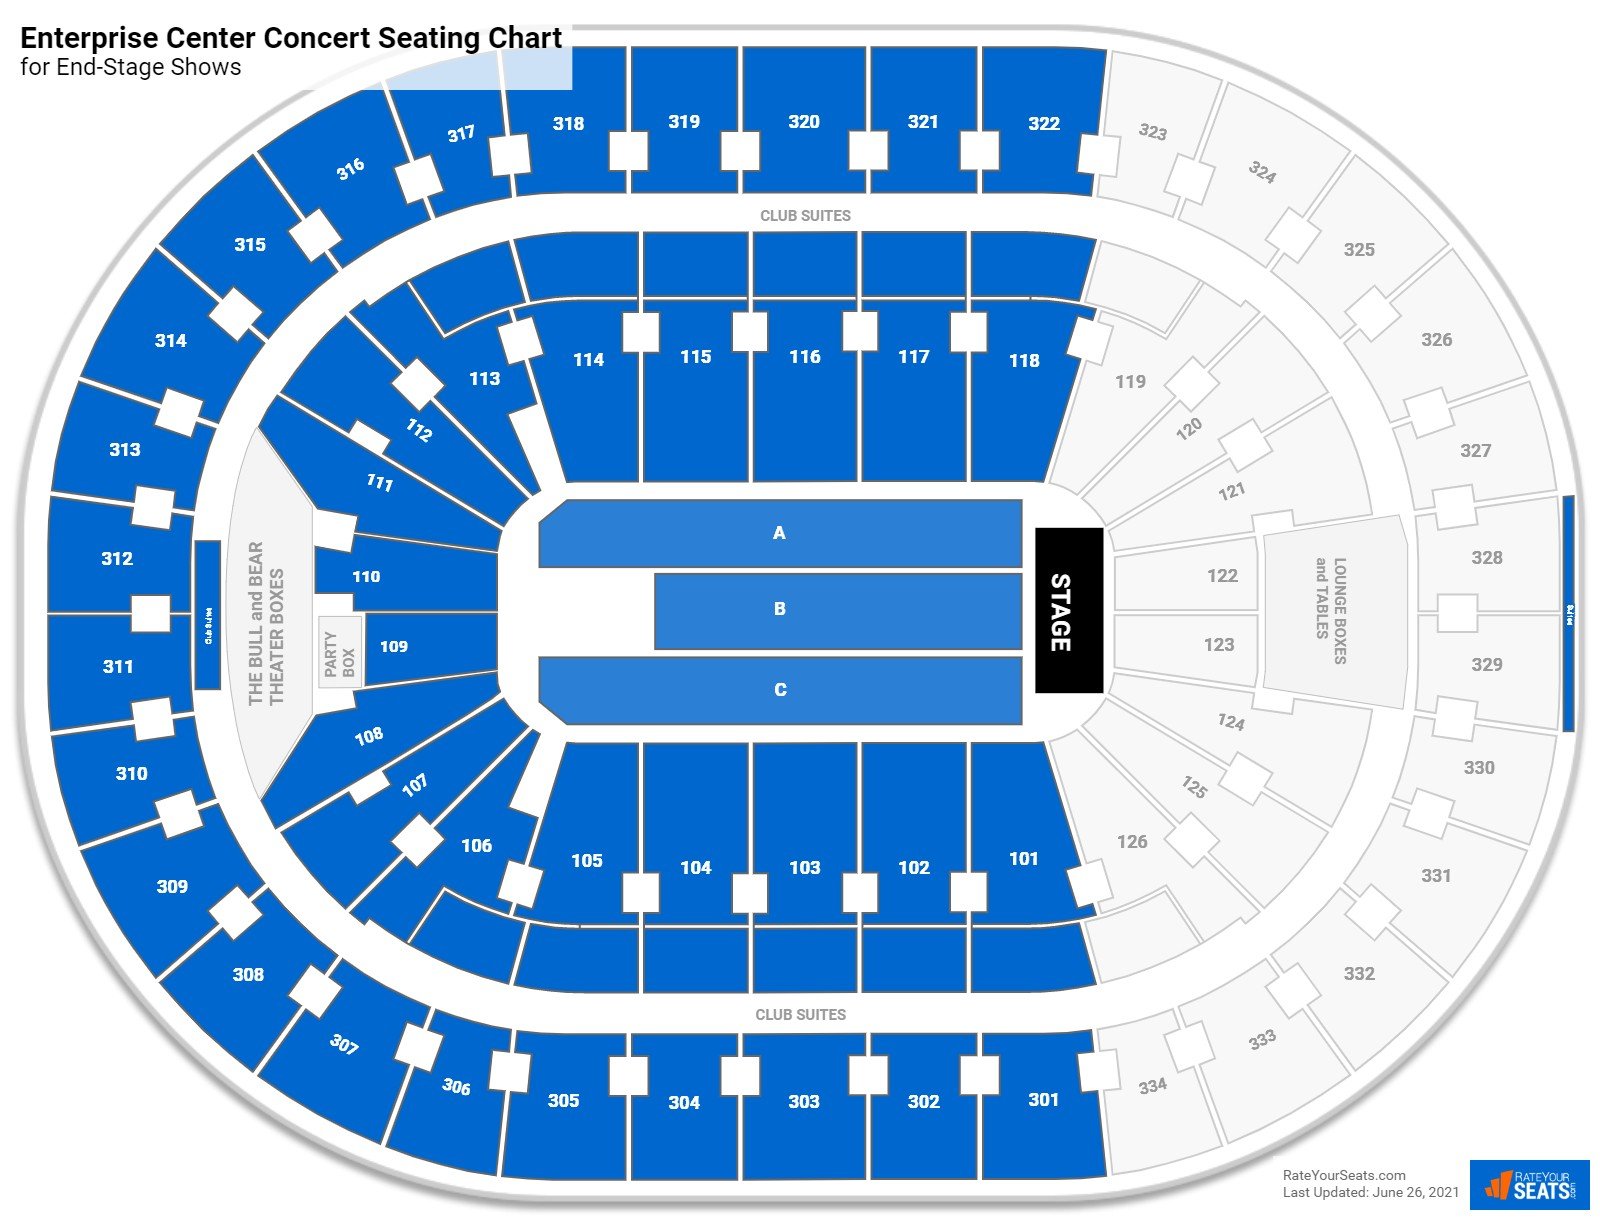 Enterprise Center Concert Seating Chart - RateYourSeats.com